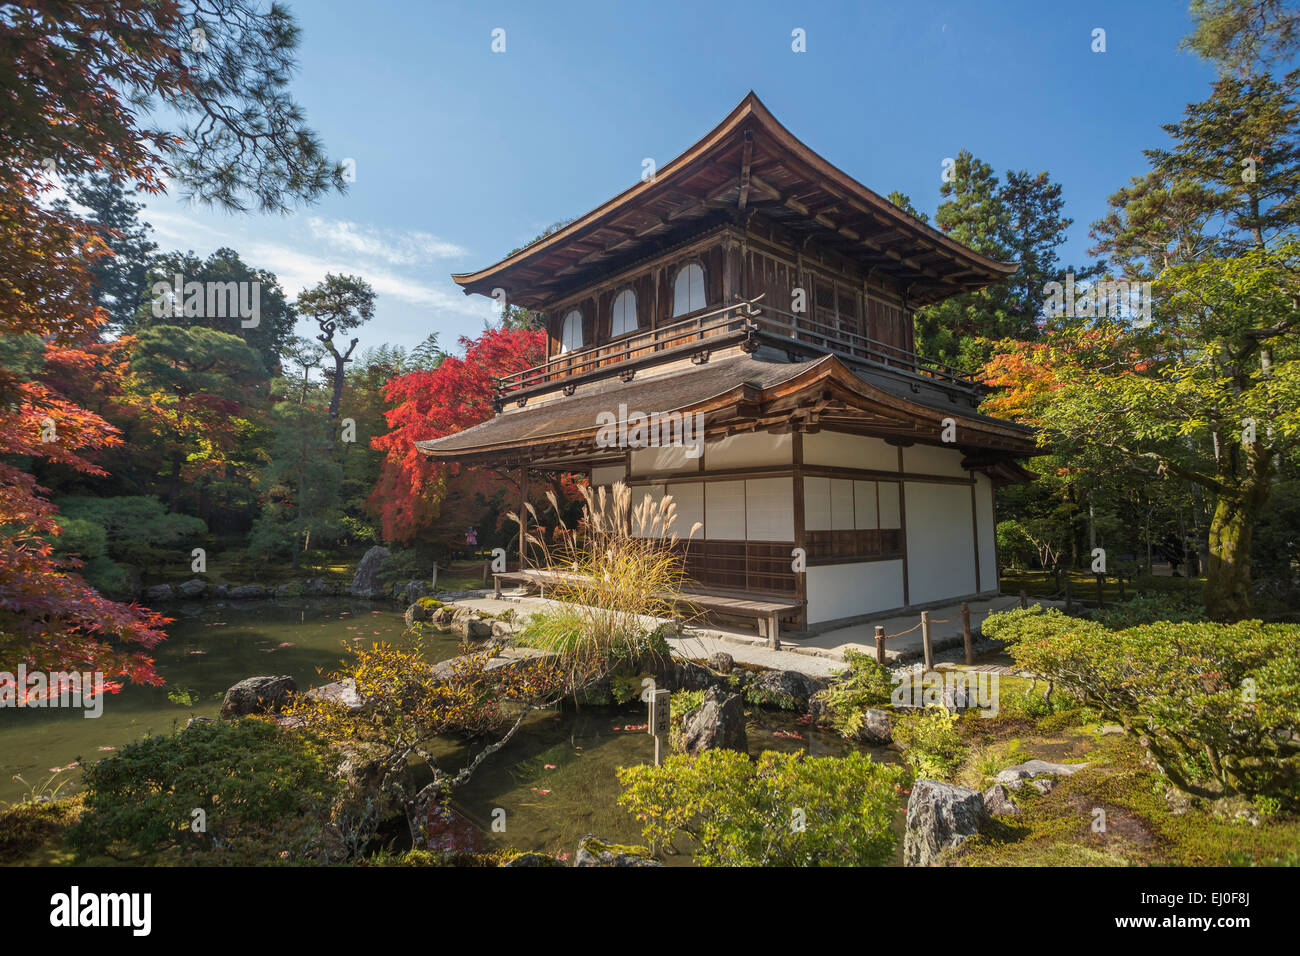 world heritage, Ginkaku-ji, Japan, Asia, Kansai, Kyoto, Japanese, Landscape, architecture, colourful, fall, garden, house, momiji Stock Photo